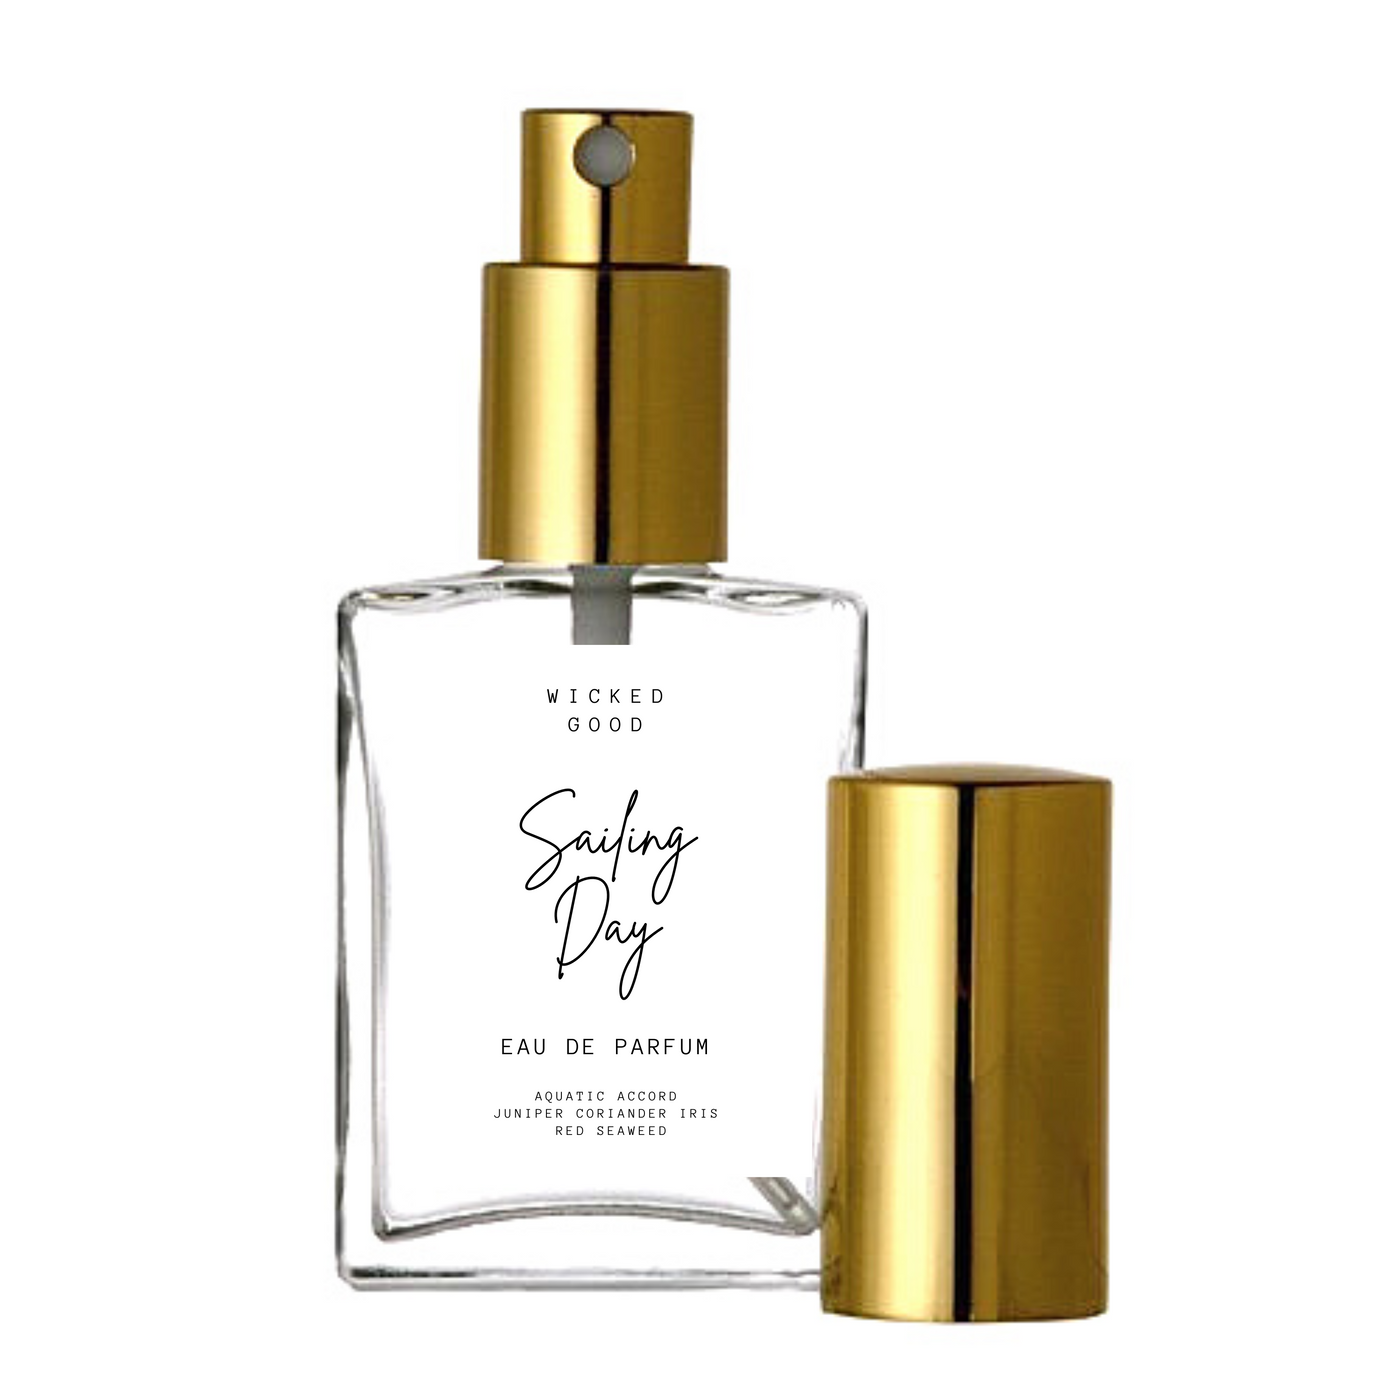 Sailing Day Perfume - Replica Maison Margiela Type Dupe | Perfume Fragrance - Free Sample